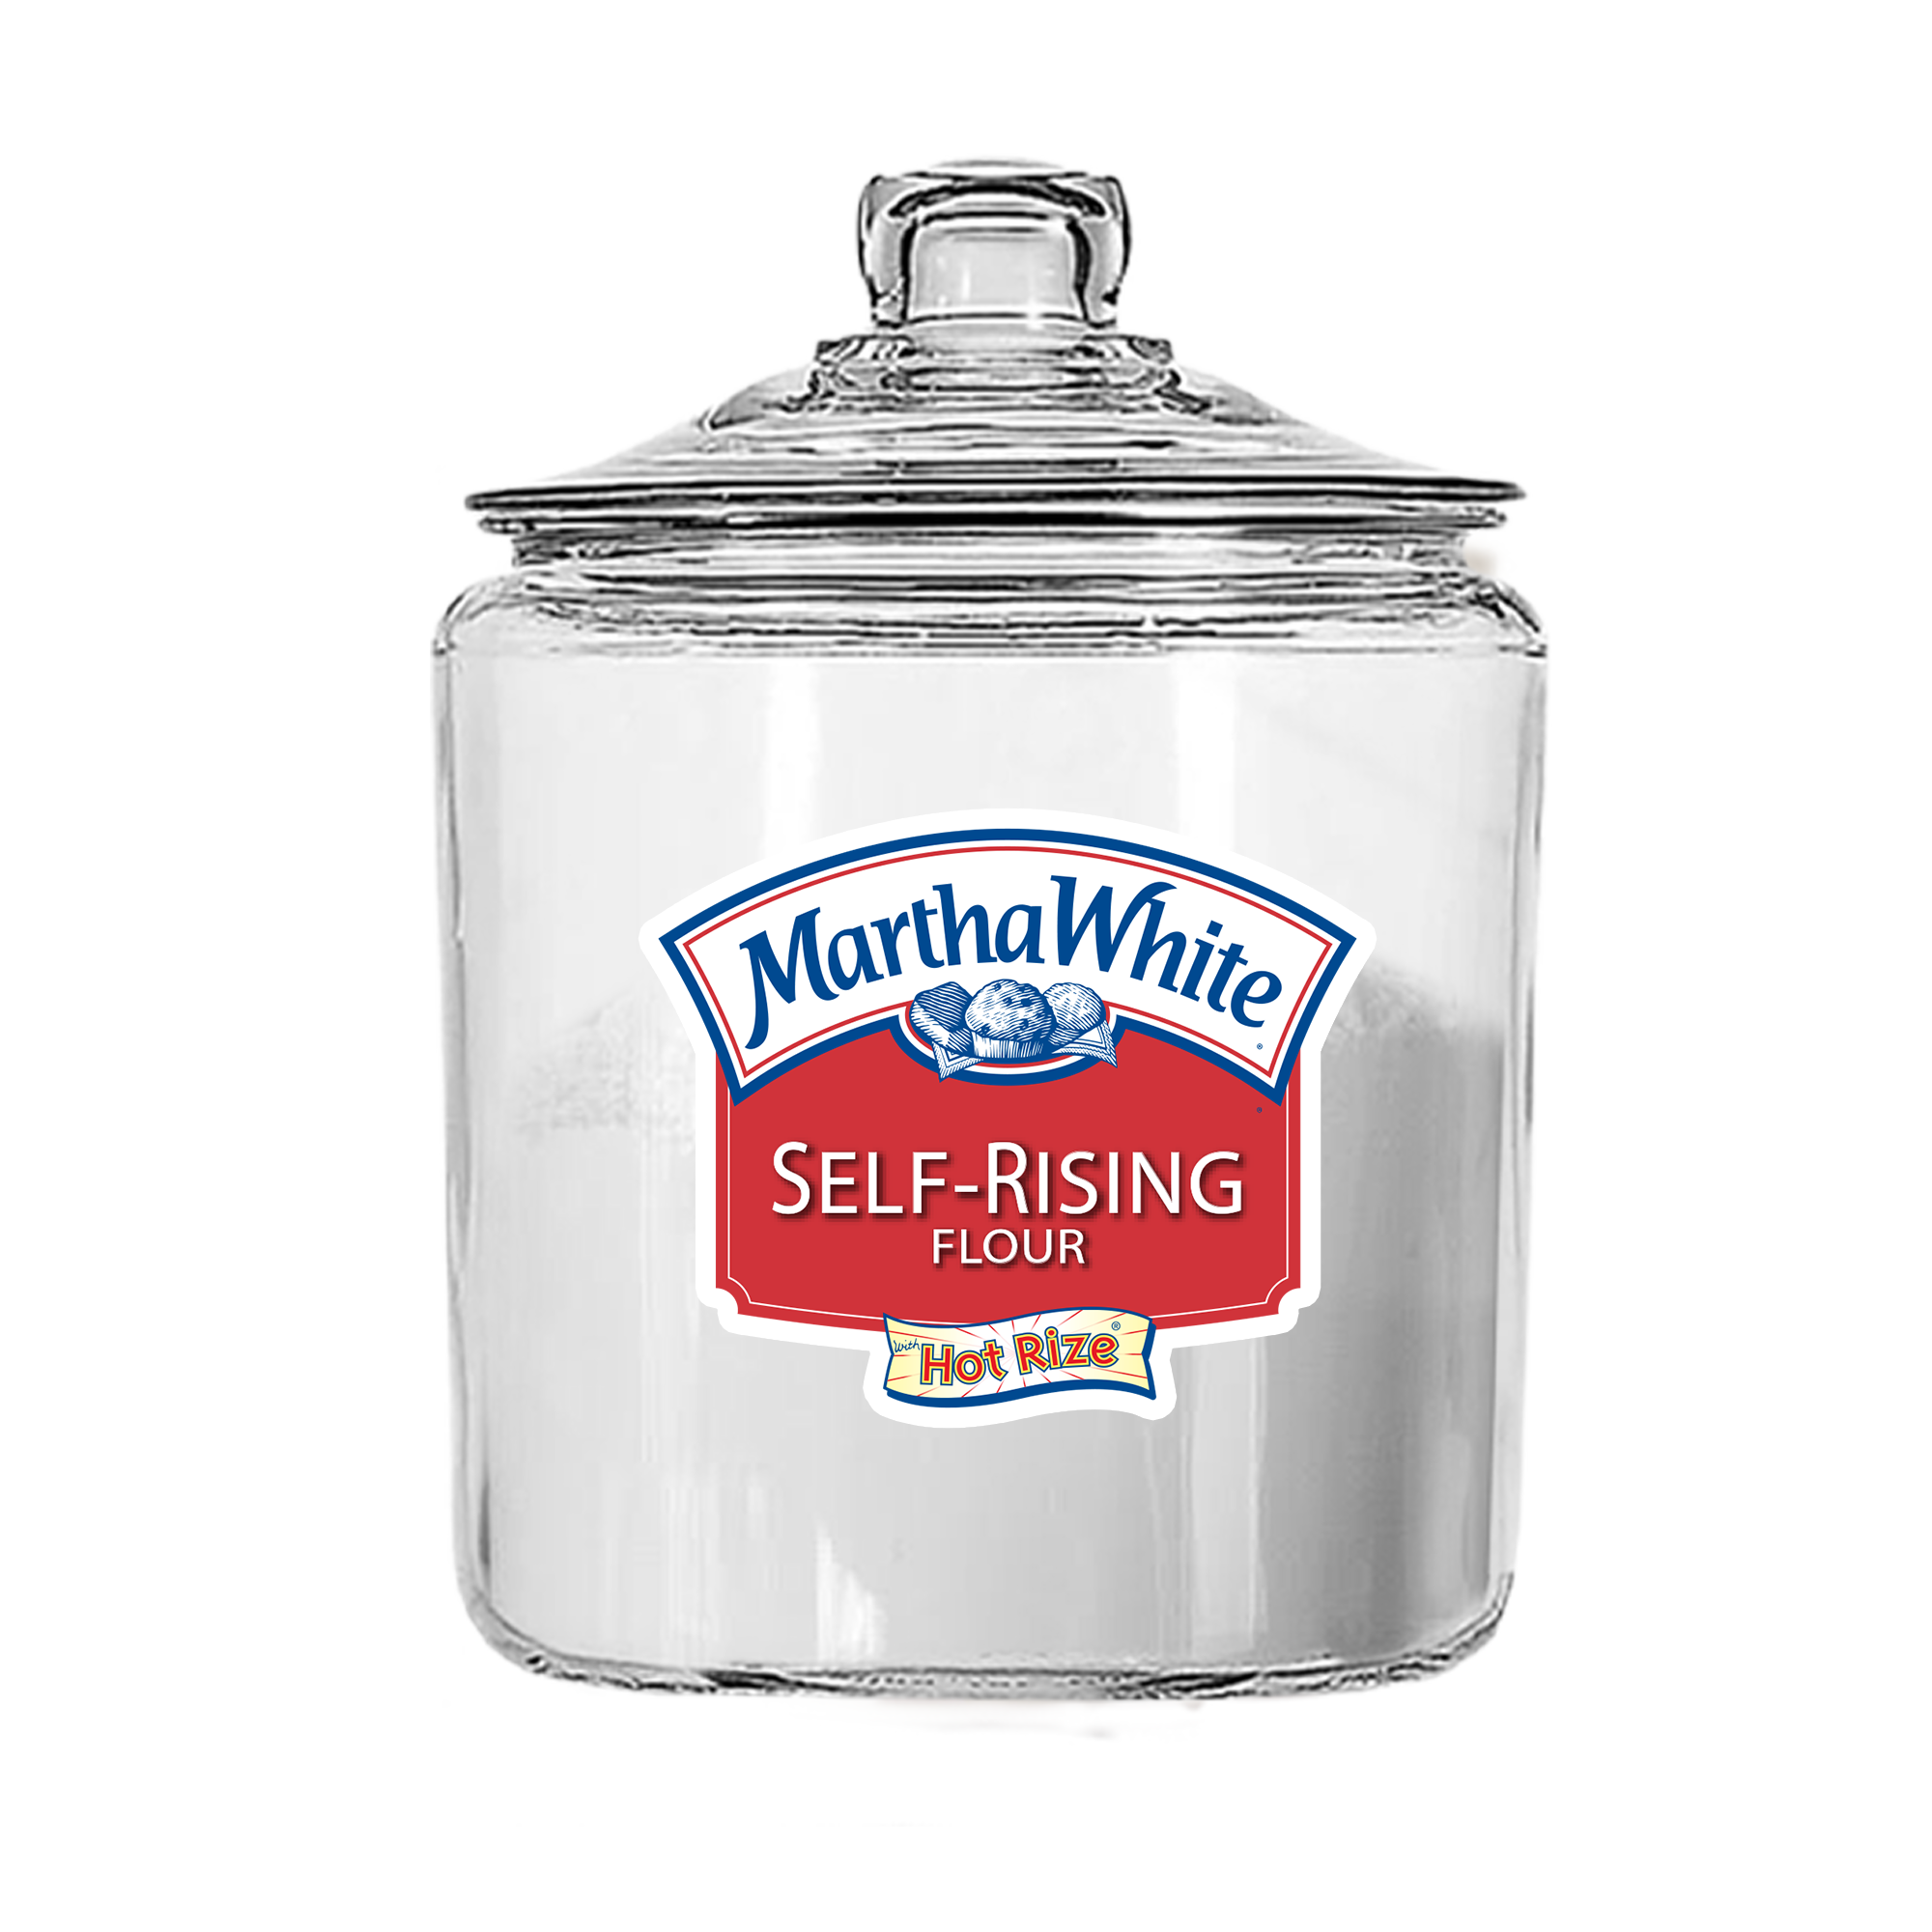 Self-Rising Flour Sticker